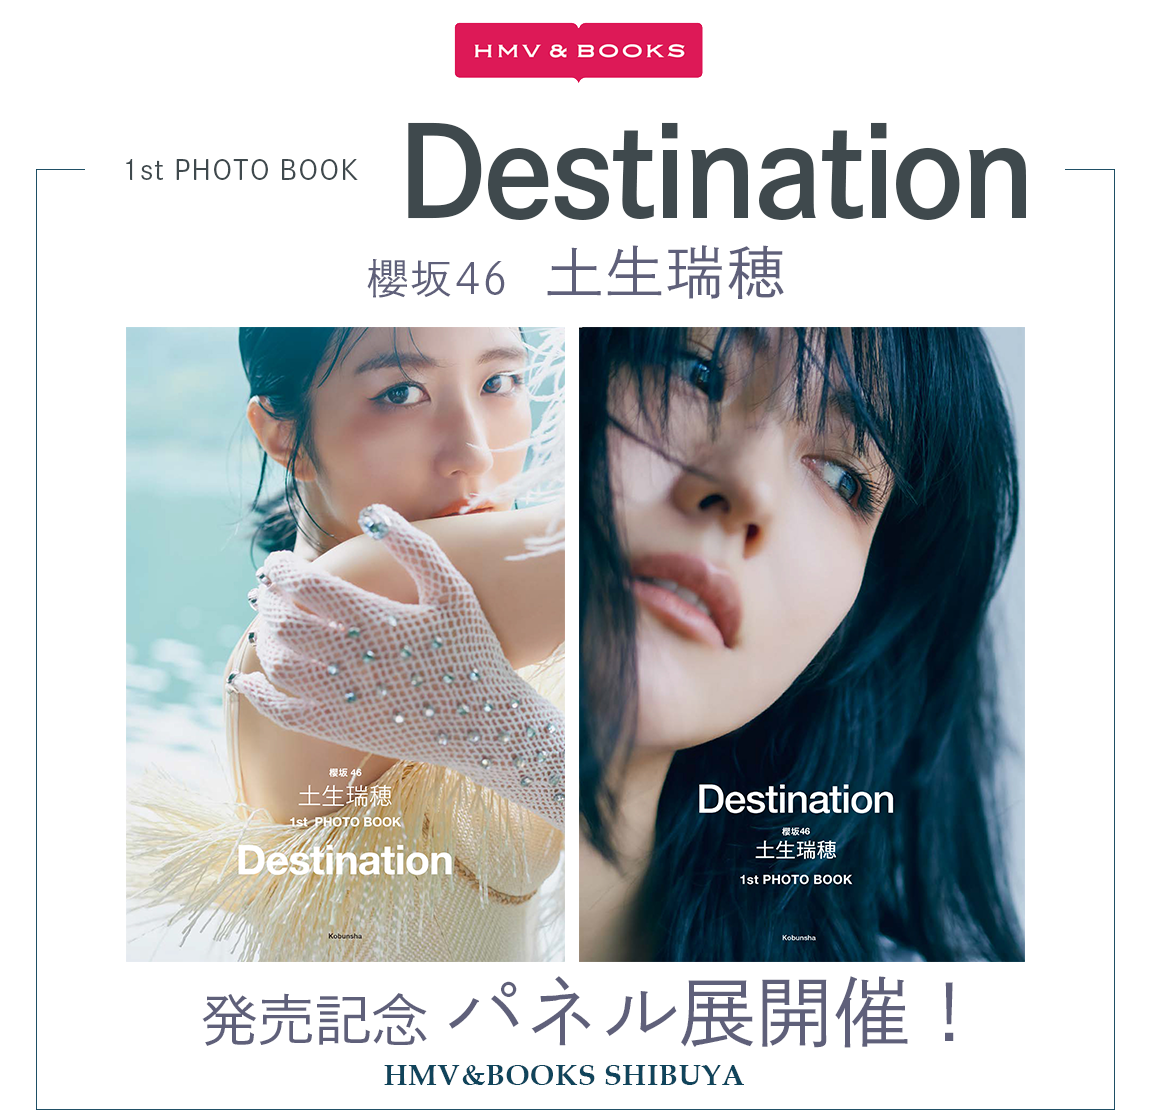 櫻坂46 土生瑞穂1st PHOTO BOOK「Destination」』発売記念パネル